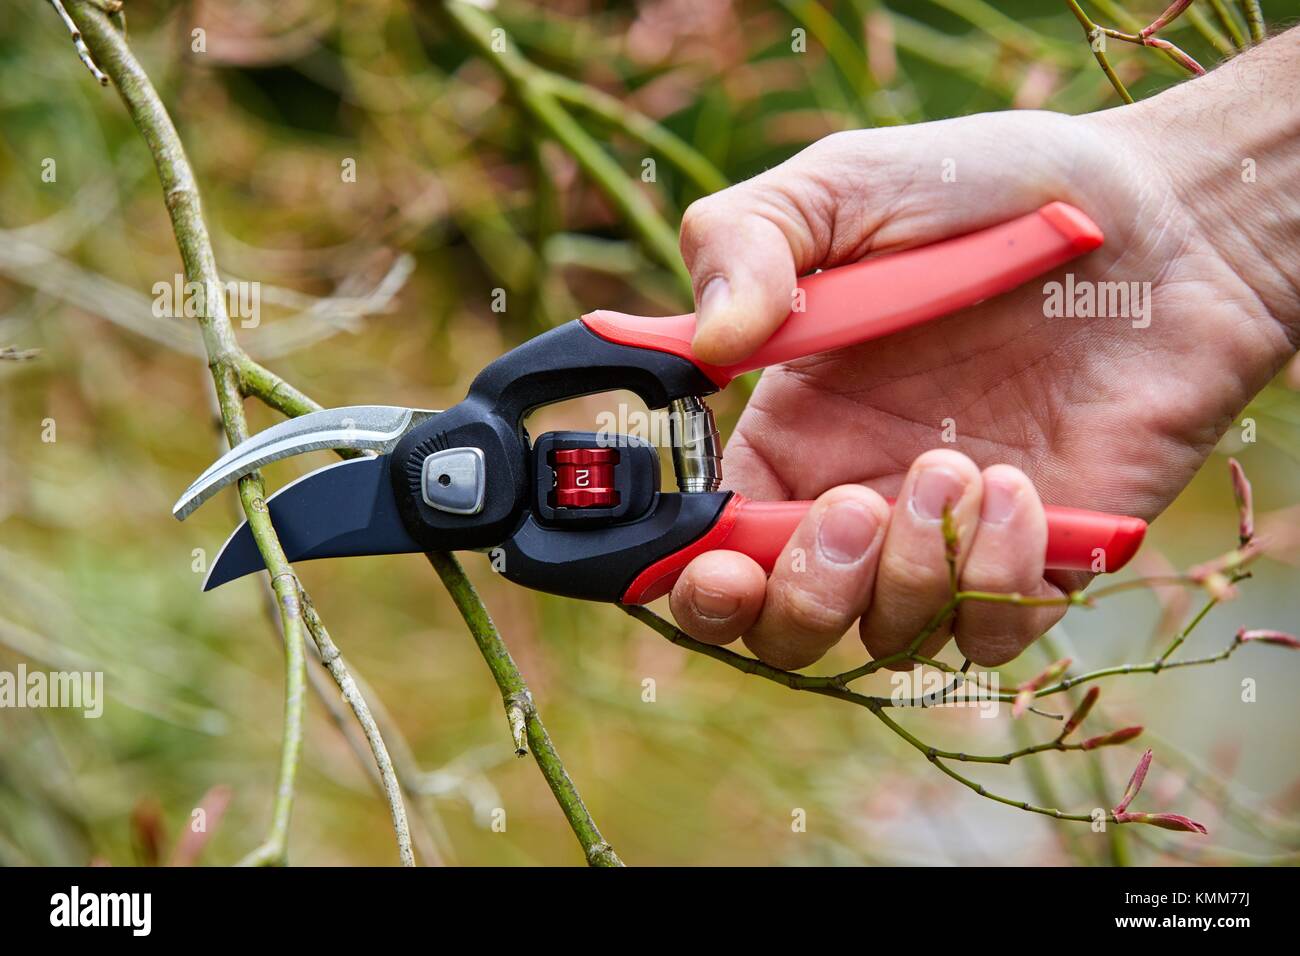 Gardener with hand tool, Pruner, Aiete Park, Donostia, San Sebastian, Gipuzkoa, Basque Country, Spain Stock Photo